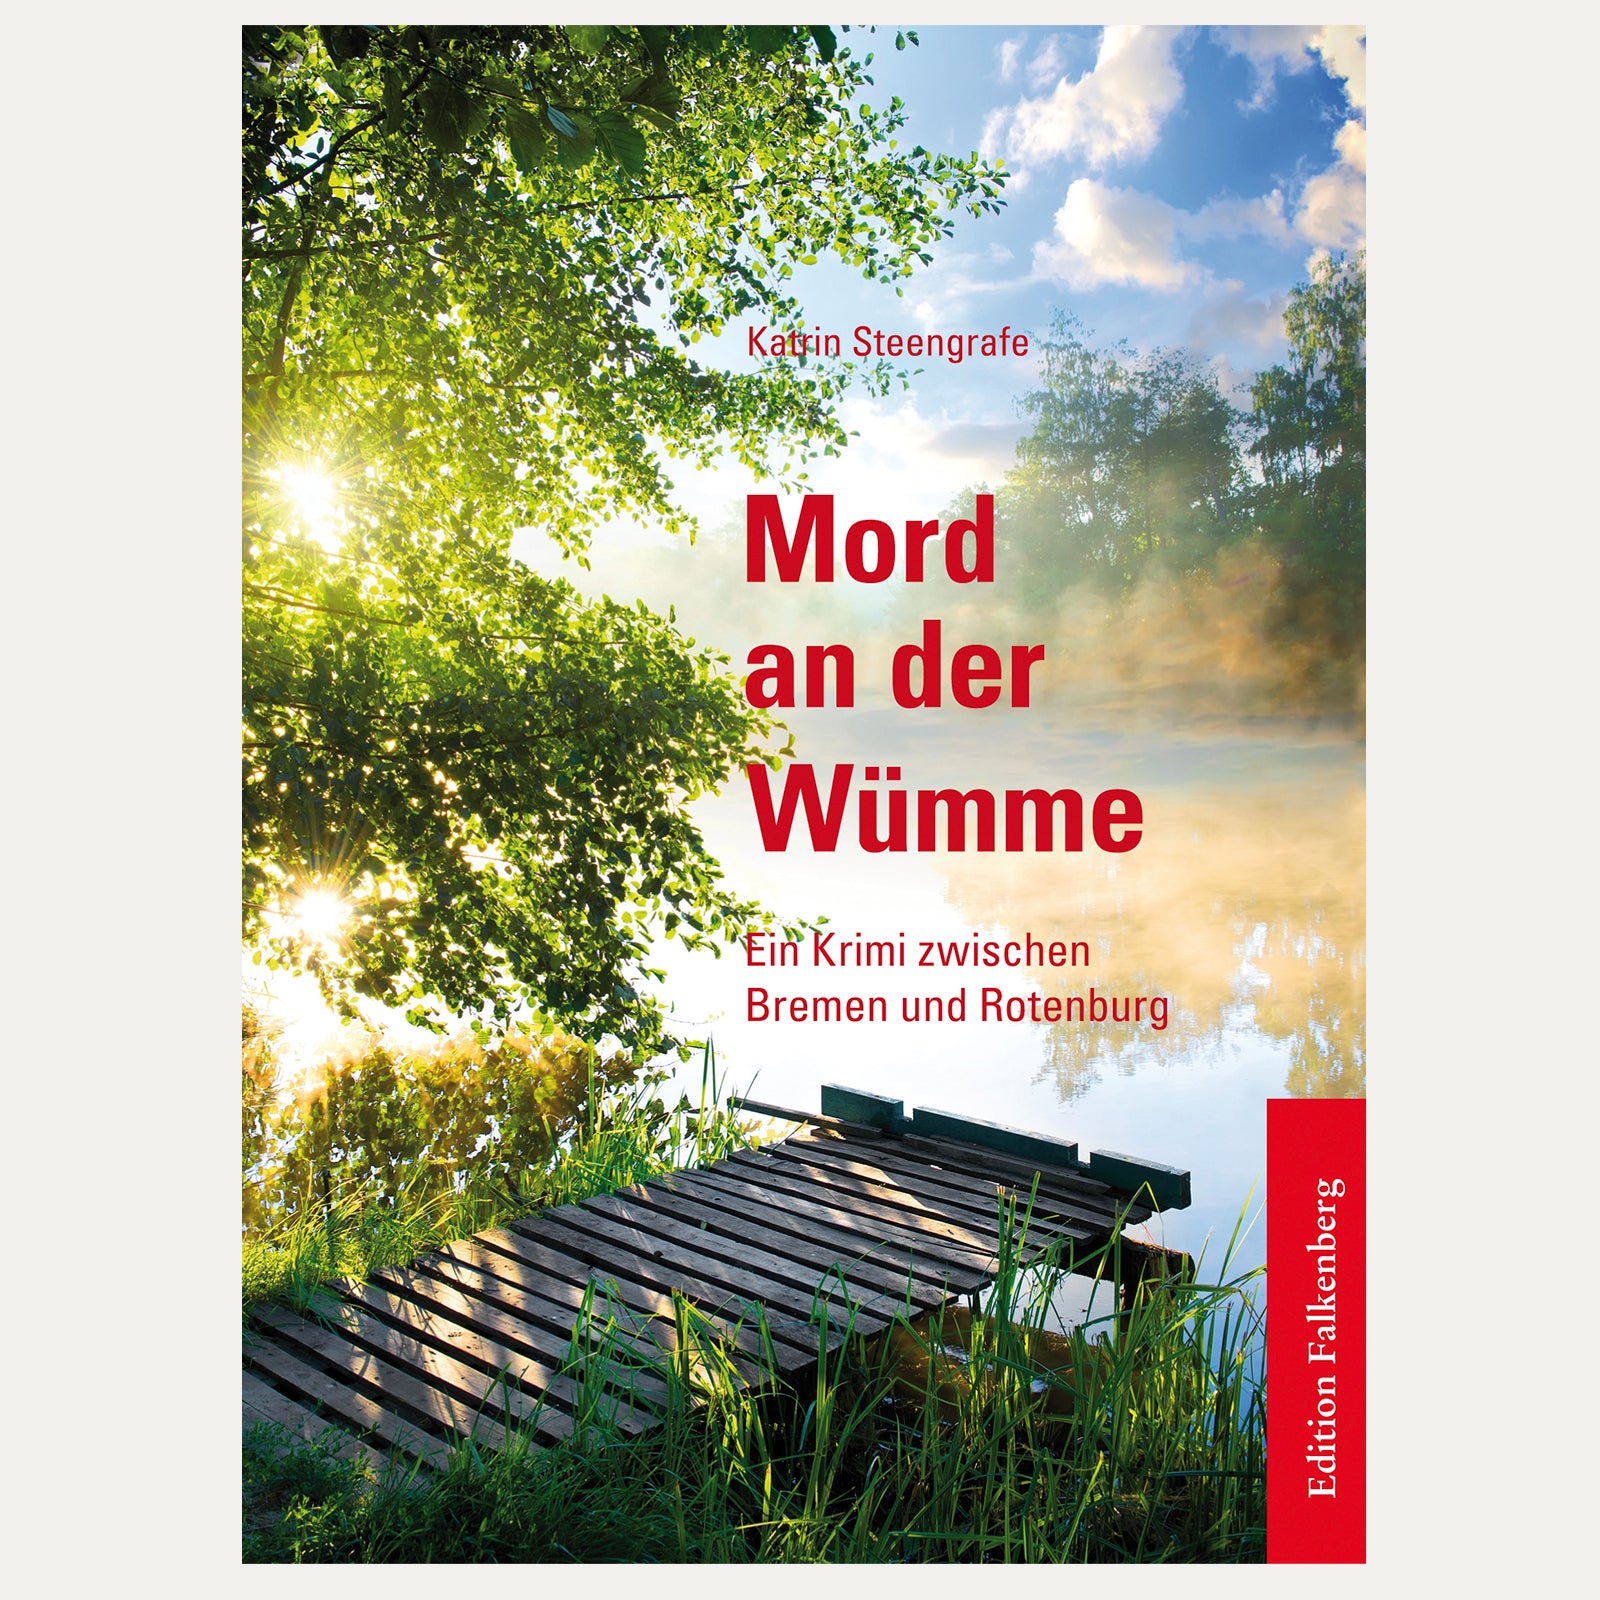 Mord an der Wümme, Katrin Steengrafe - Krimi - Made in Bremen - Edition Falkenberg - 